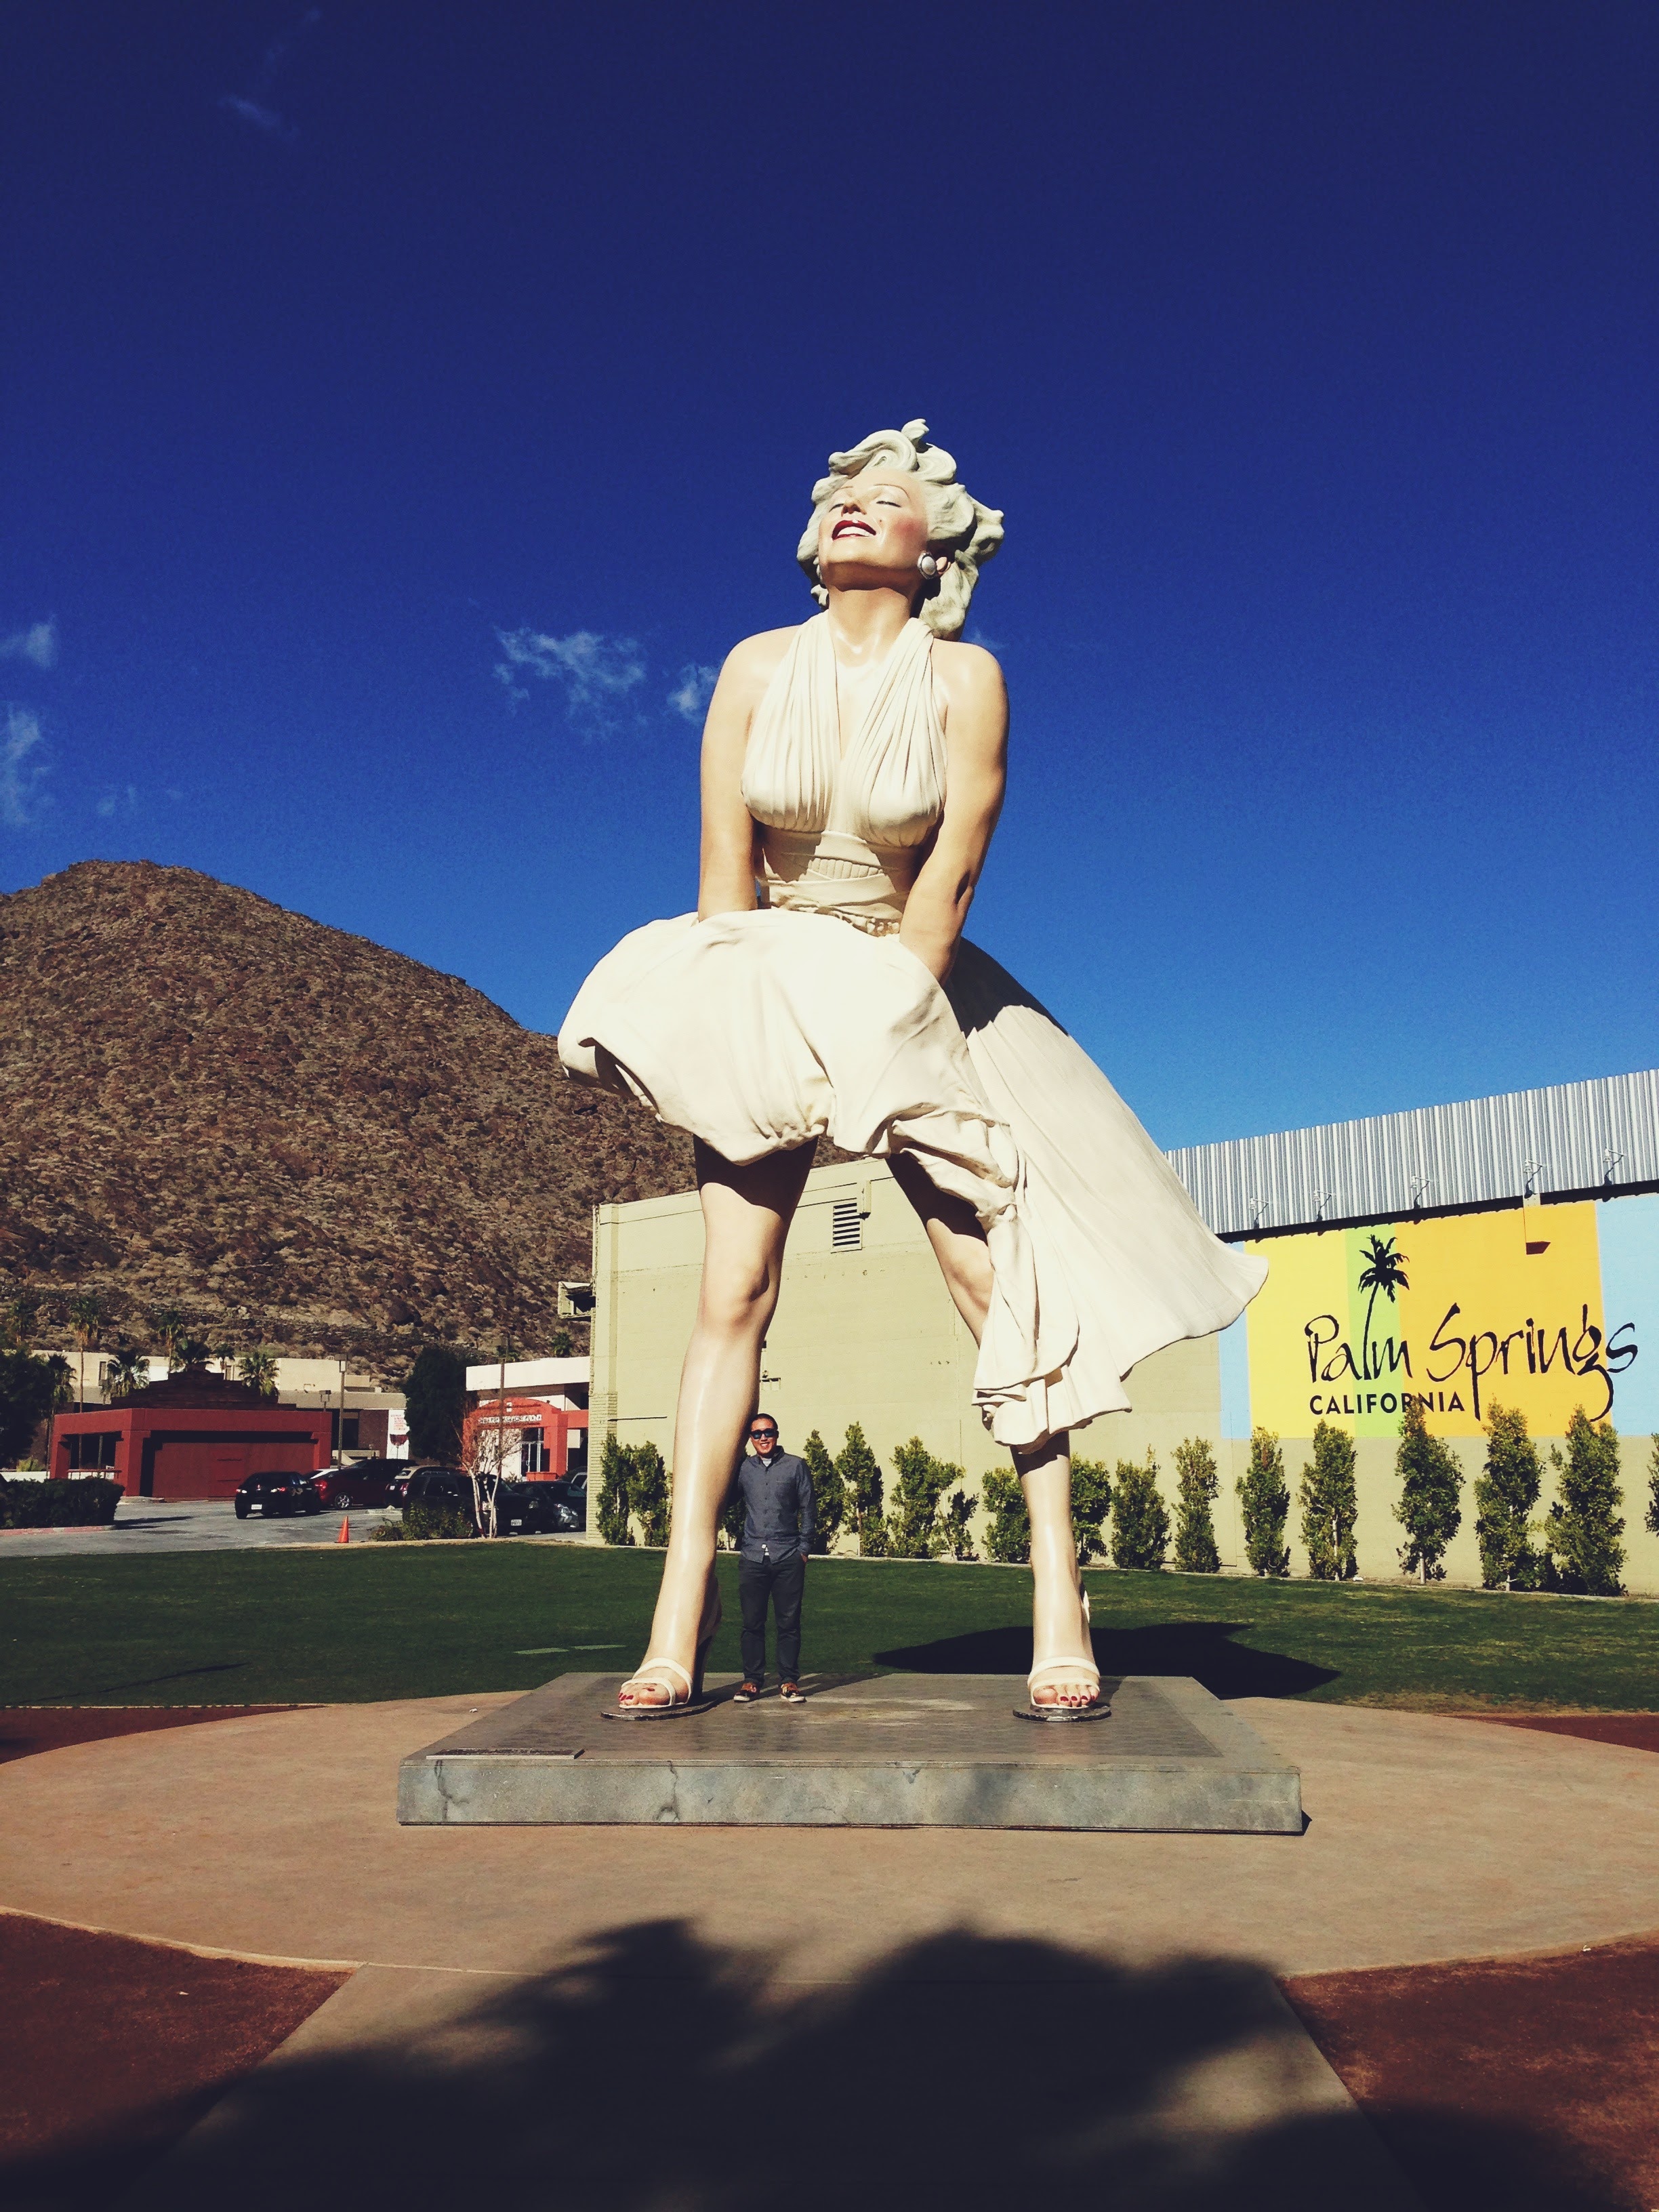 The 26-foot Marilyn Monroe statue in Palm Springs